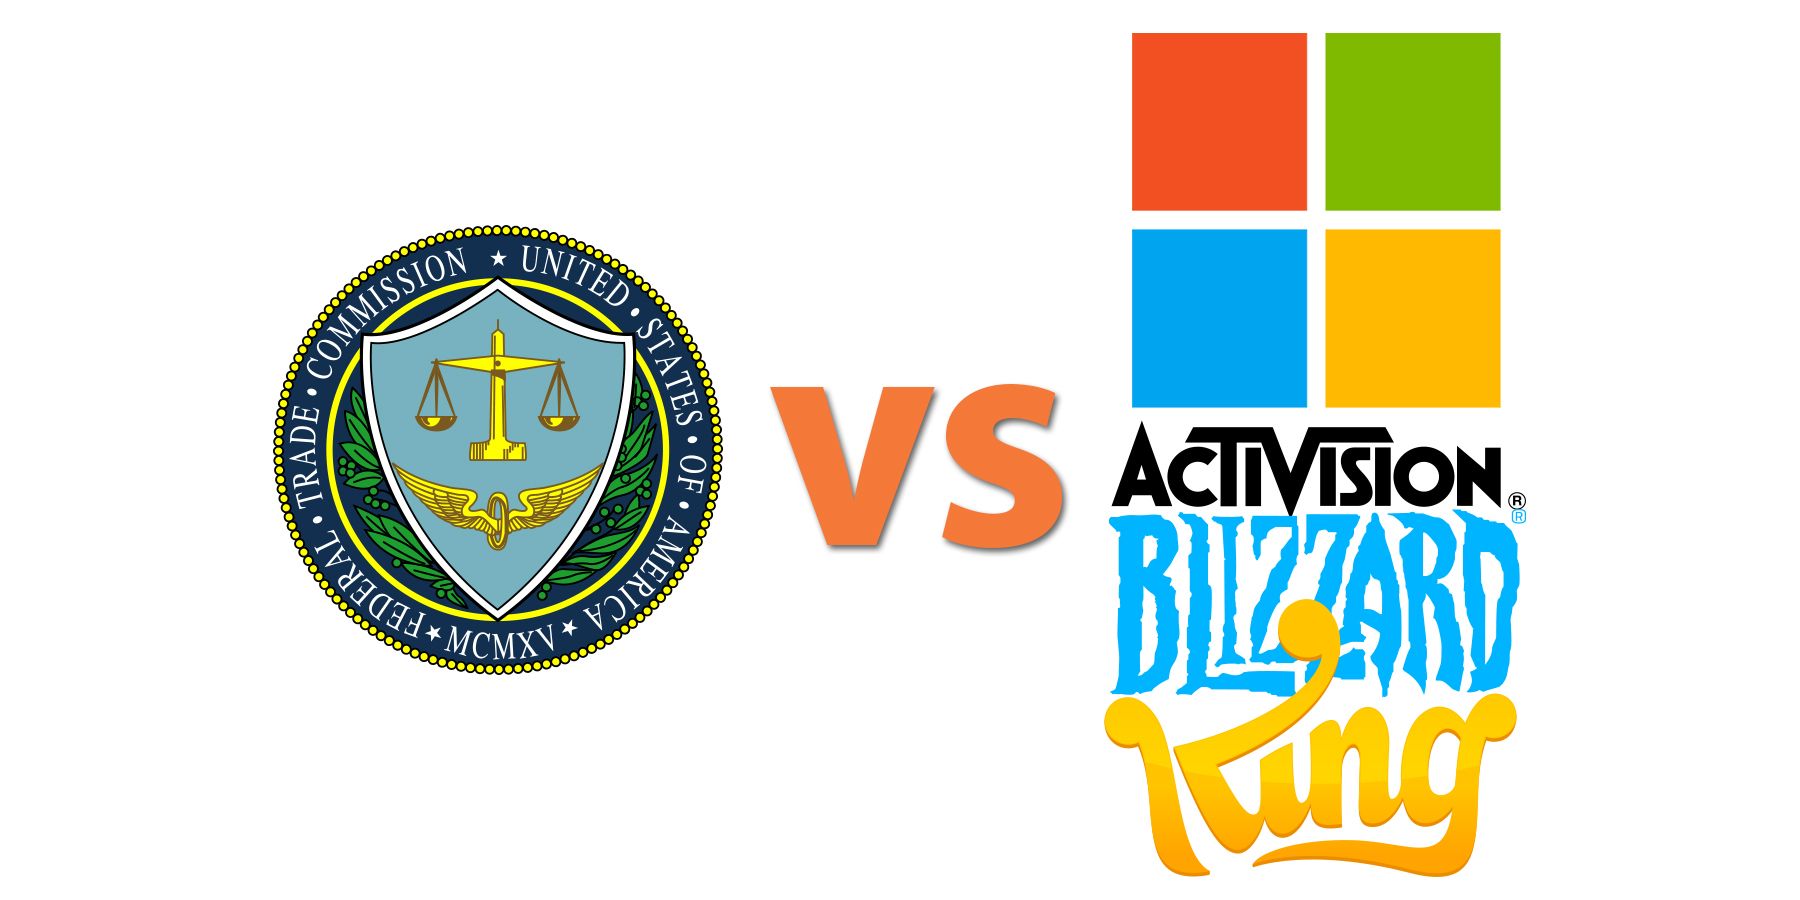 FTC Moves Against Microsoft, Activision Blizzard Merger – Deadline